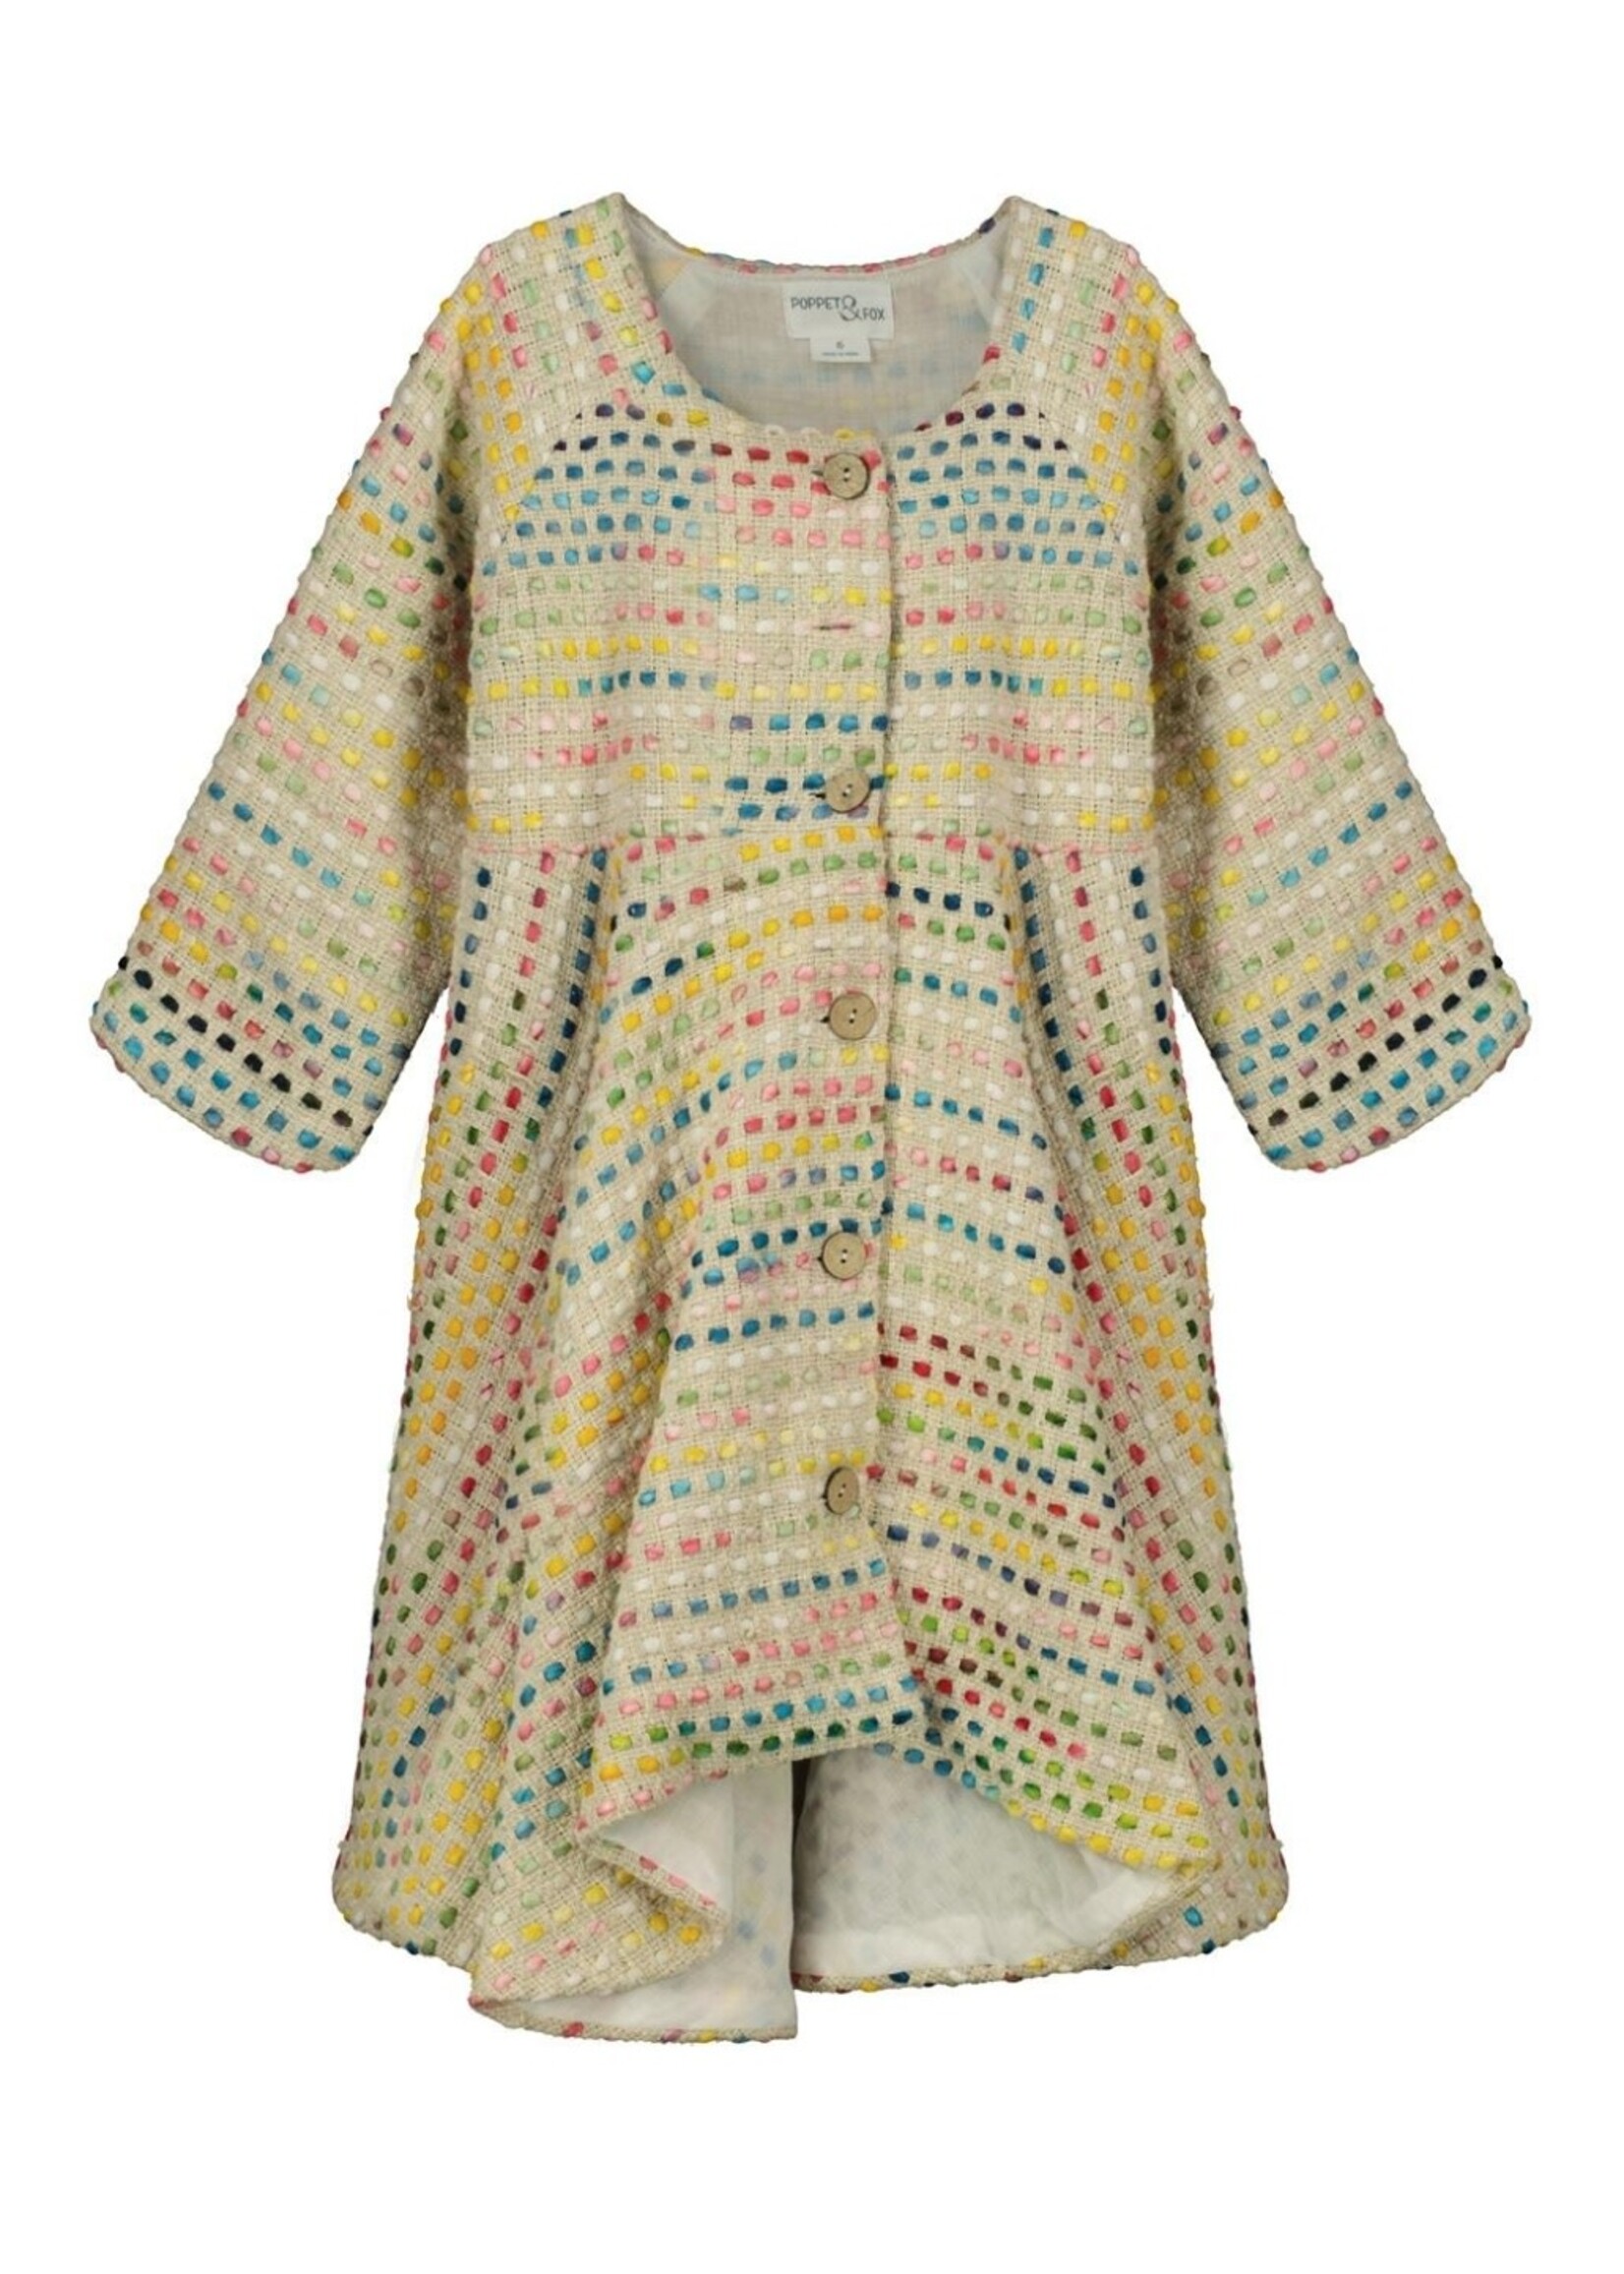 Poppet & Fox Poppet & Fox, Opera Coat Dress || Oatmeal Dobby with Chunky Pink, Yellow, Avocado Green and Light Blue Yarn Stripes